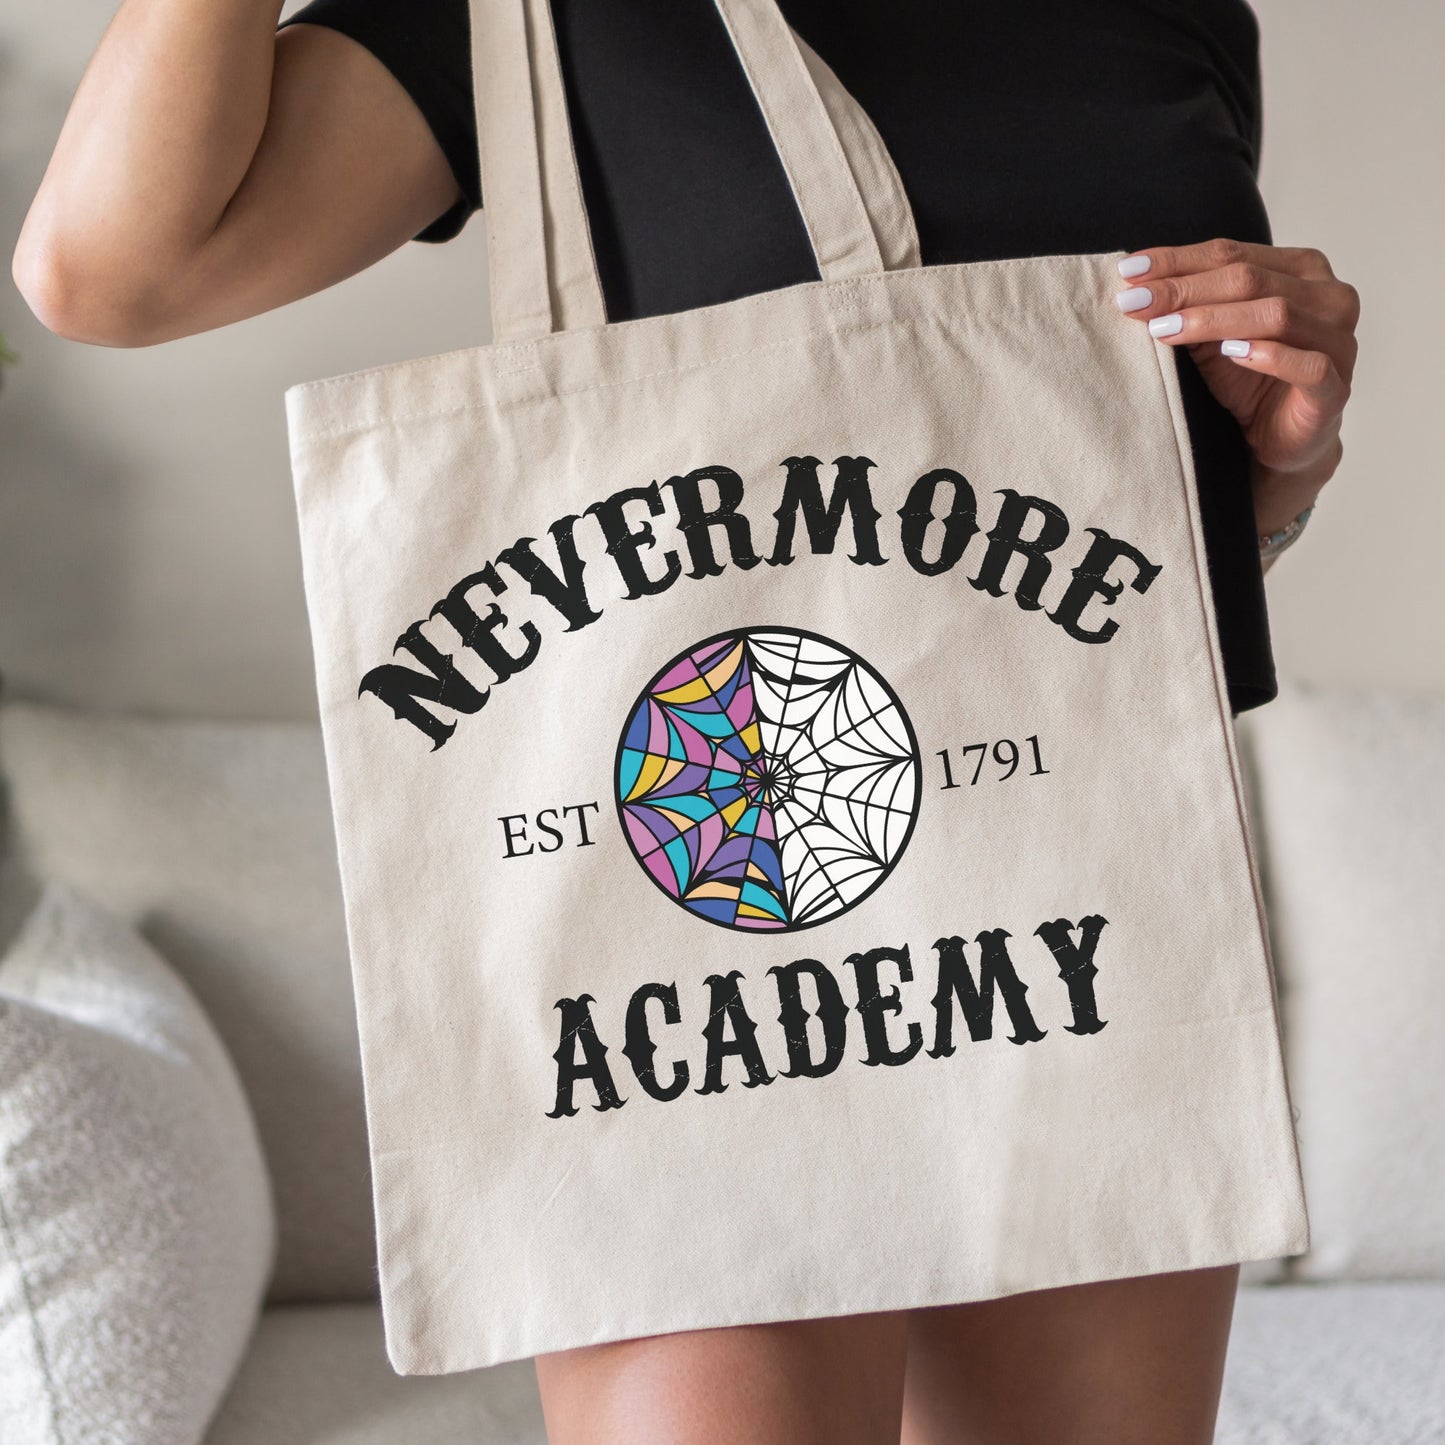 Nevermore tote bag, Nevermore academy, Wednesday Addams tote bag, Goth book bag, Wednesday Addams grocery bag, Horror tote bag